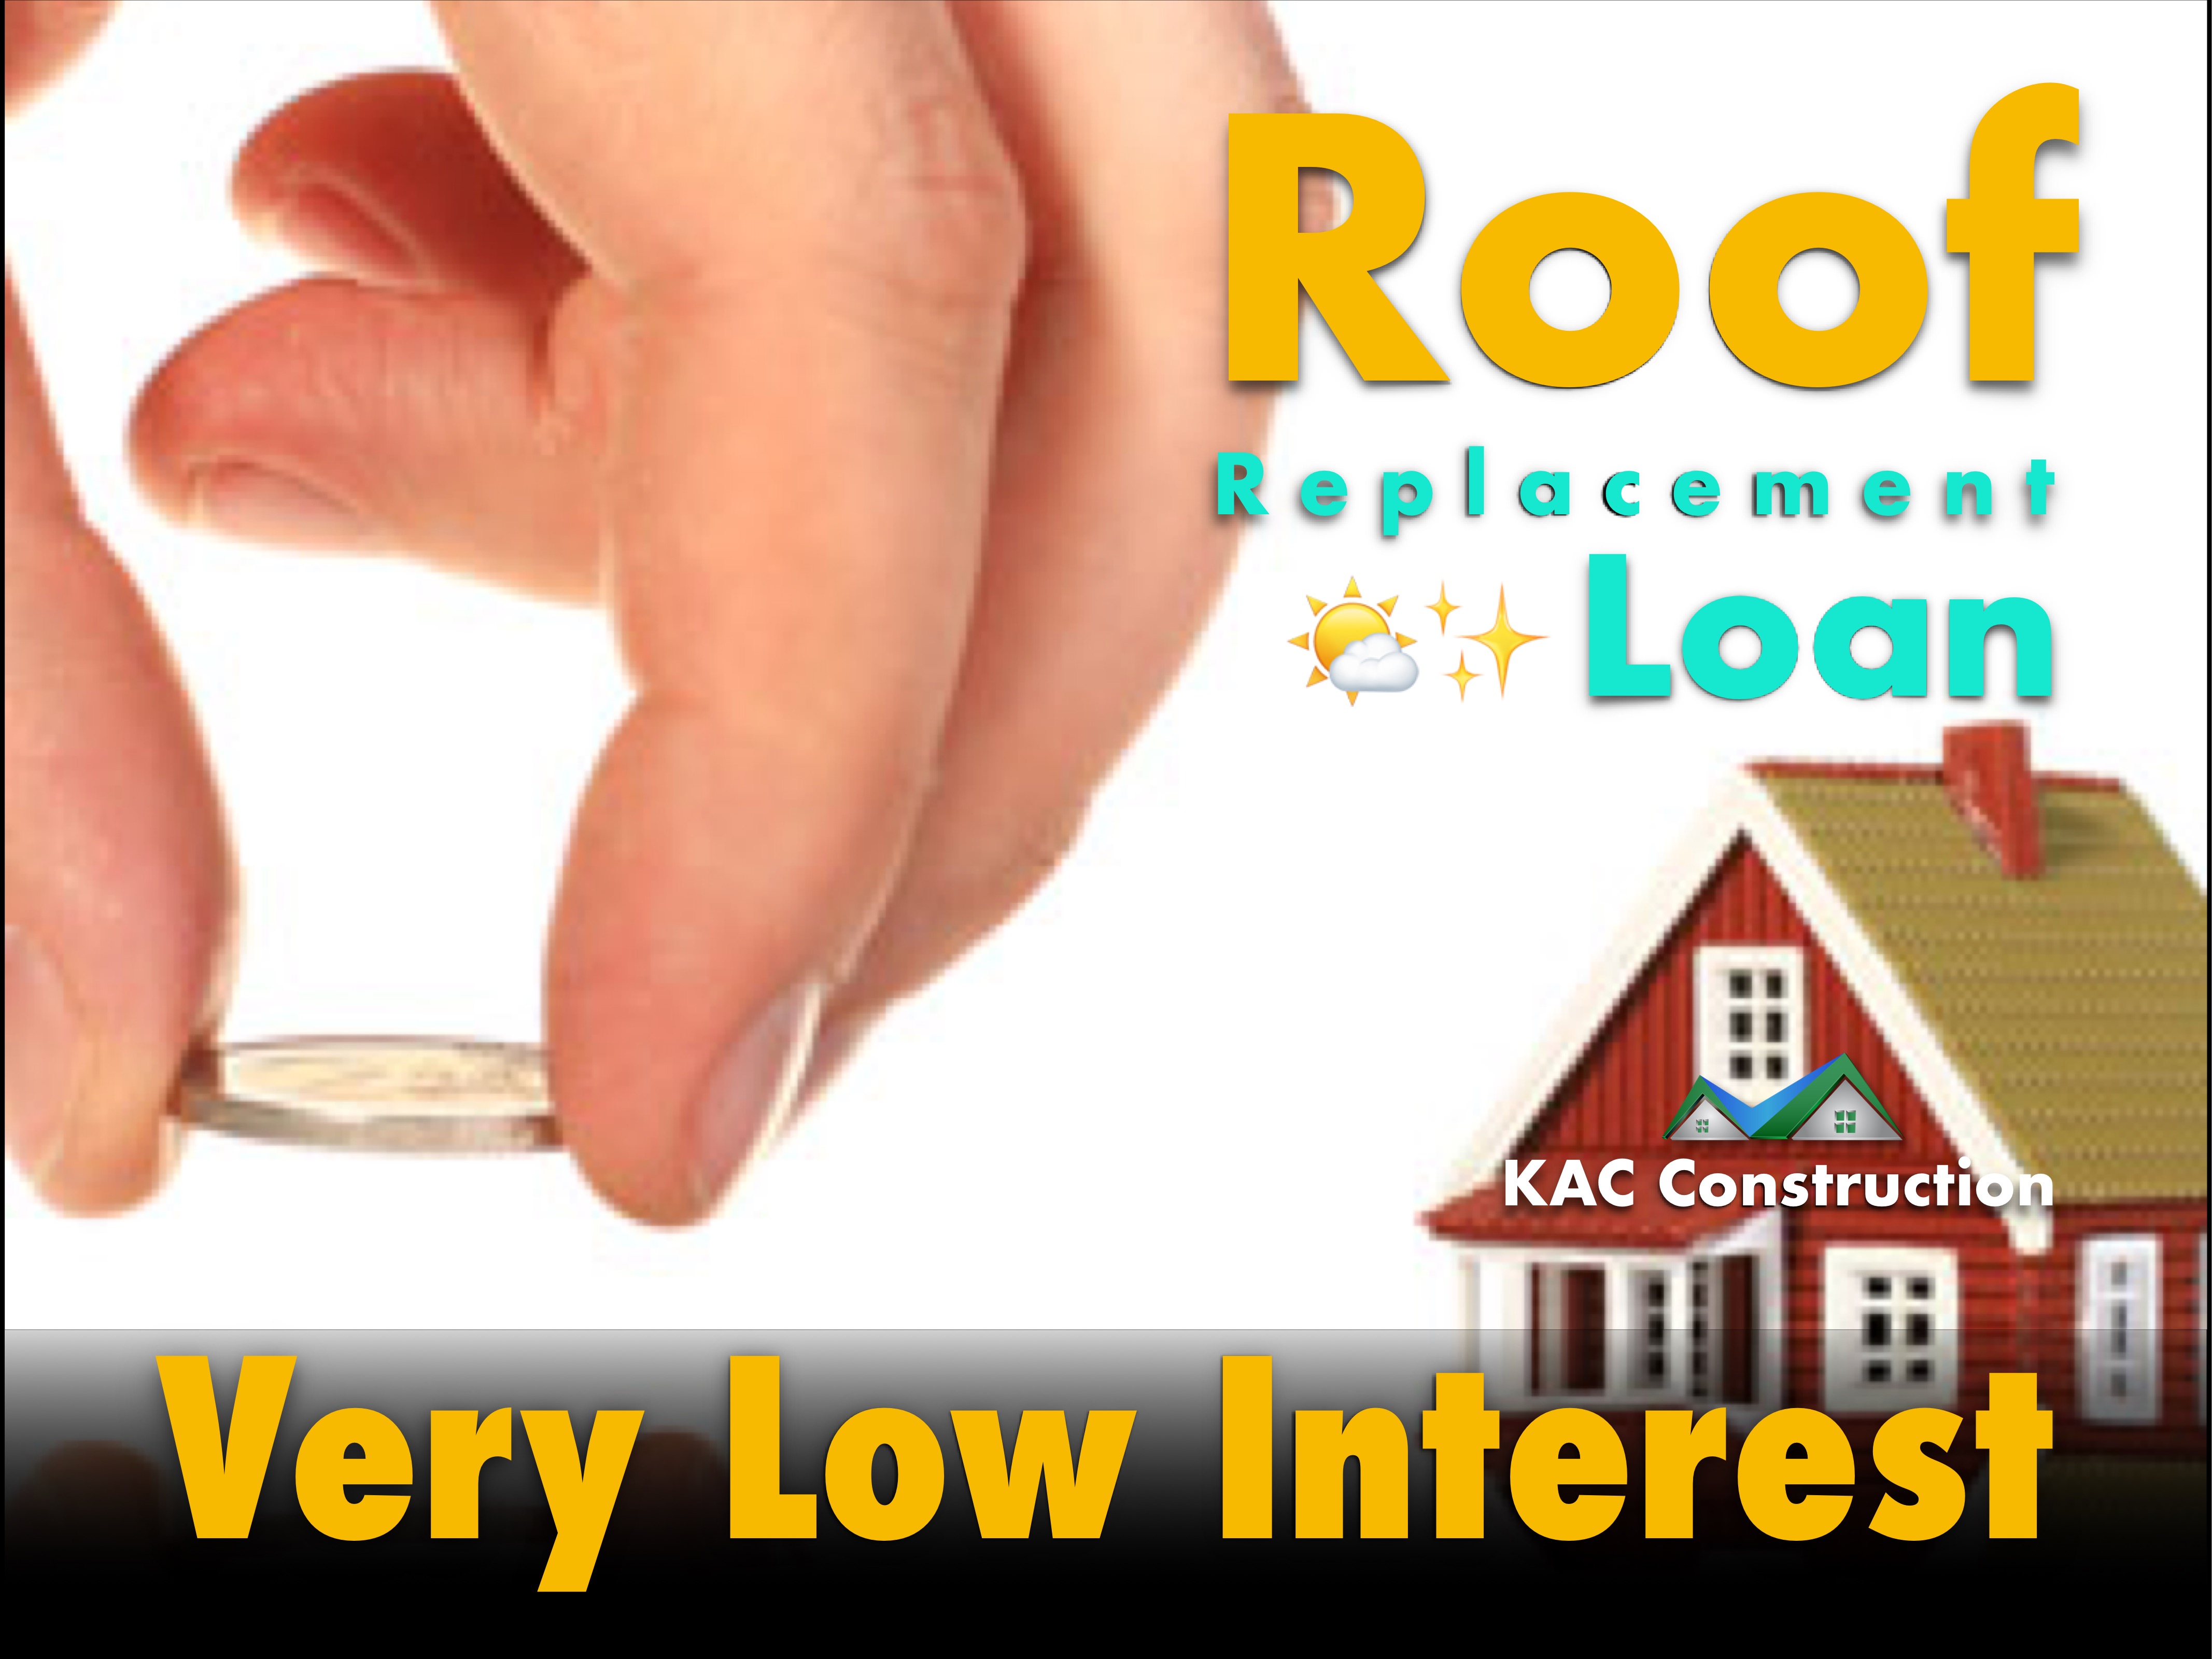 Interest roof loa low interest oof Ian ri, los i roo get loan, low inst oof I Loan ri, low intestroof Financing, low instnancing ri